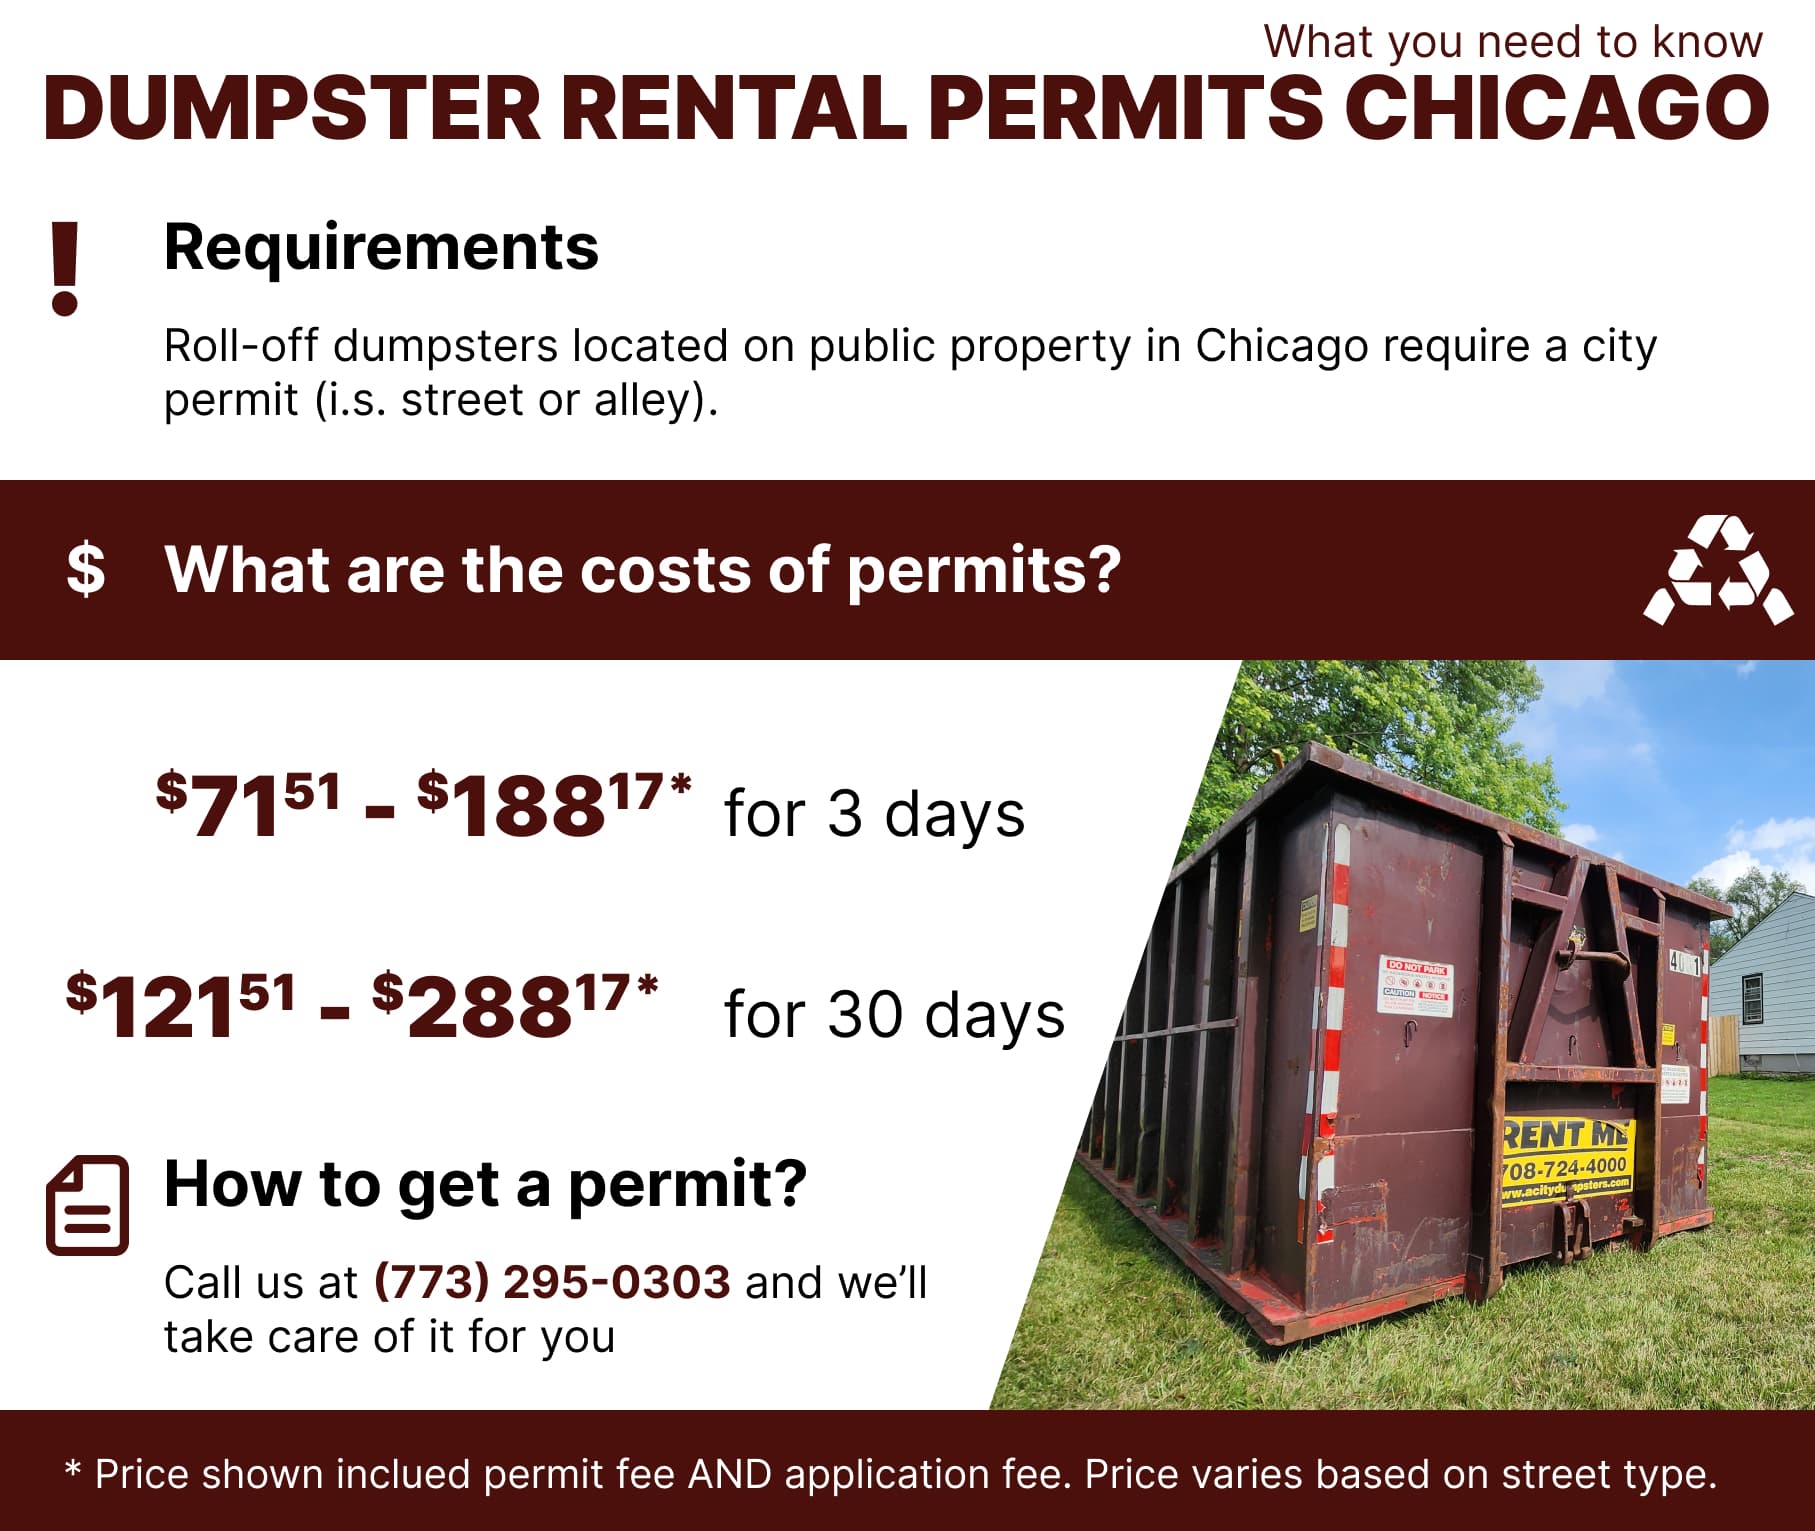 Dumpster rental permits